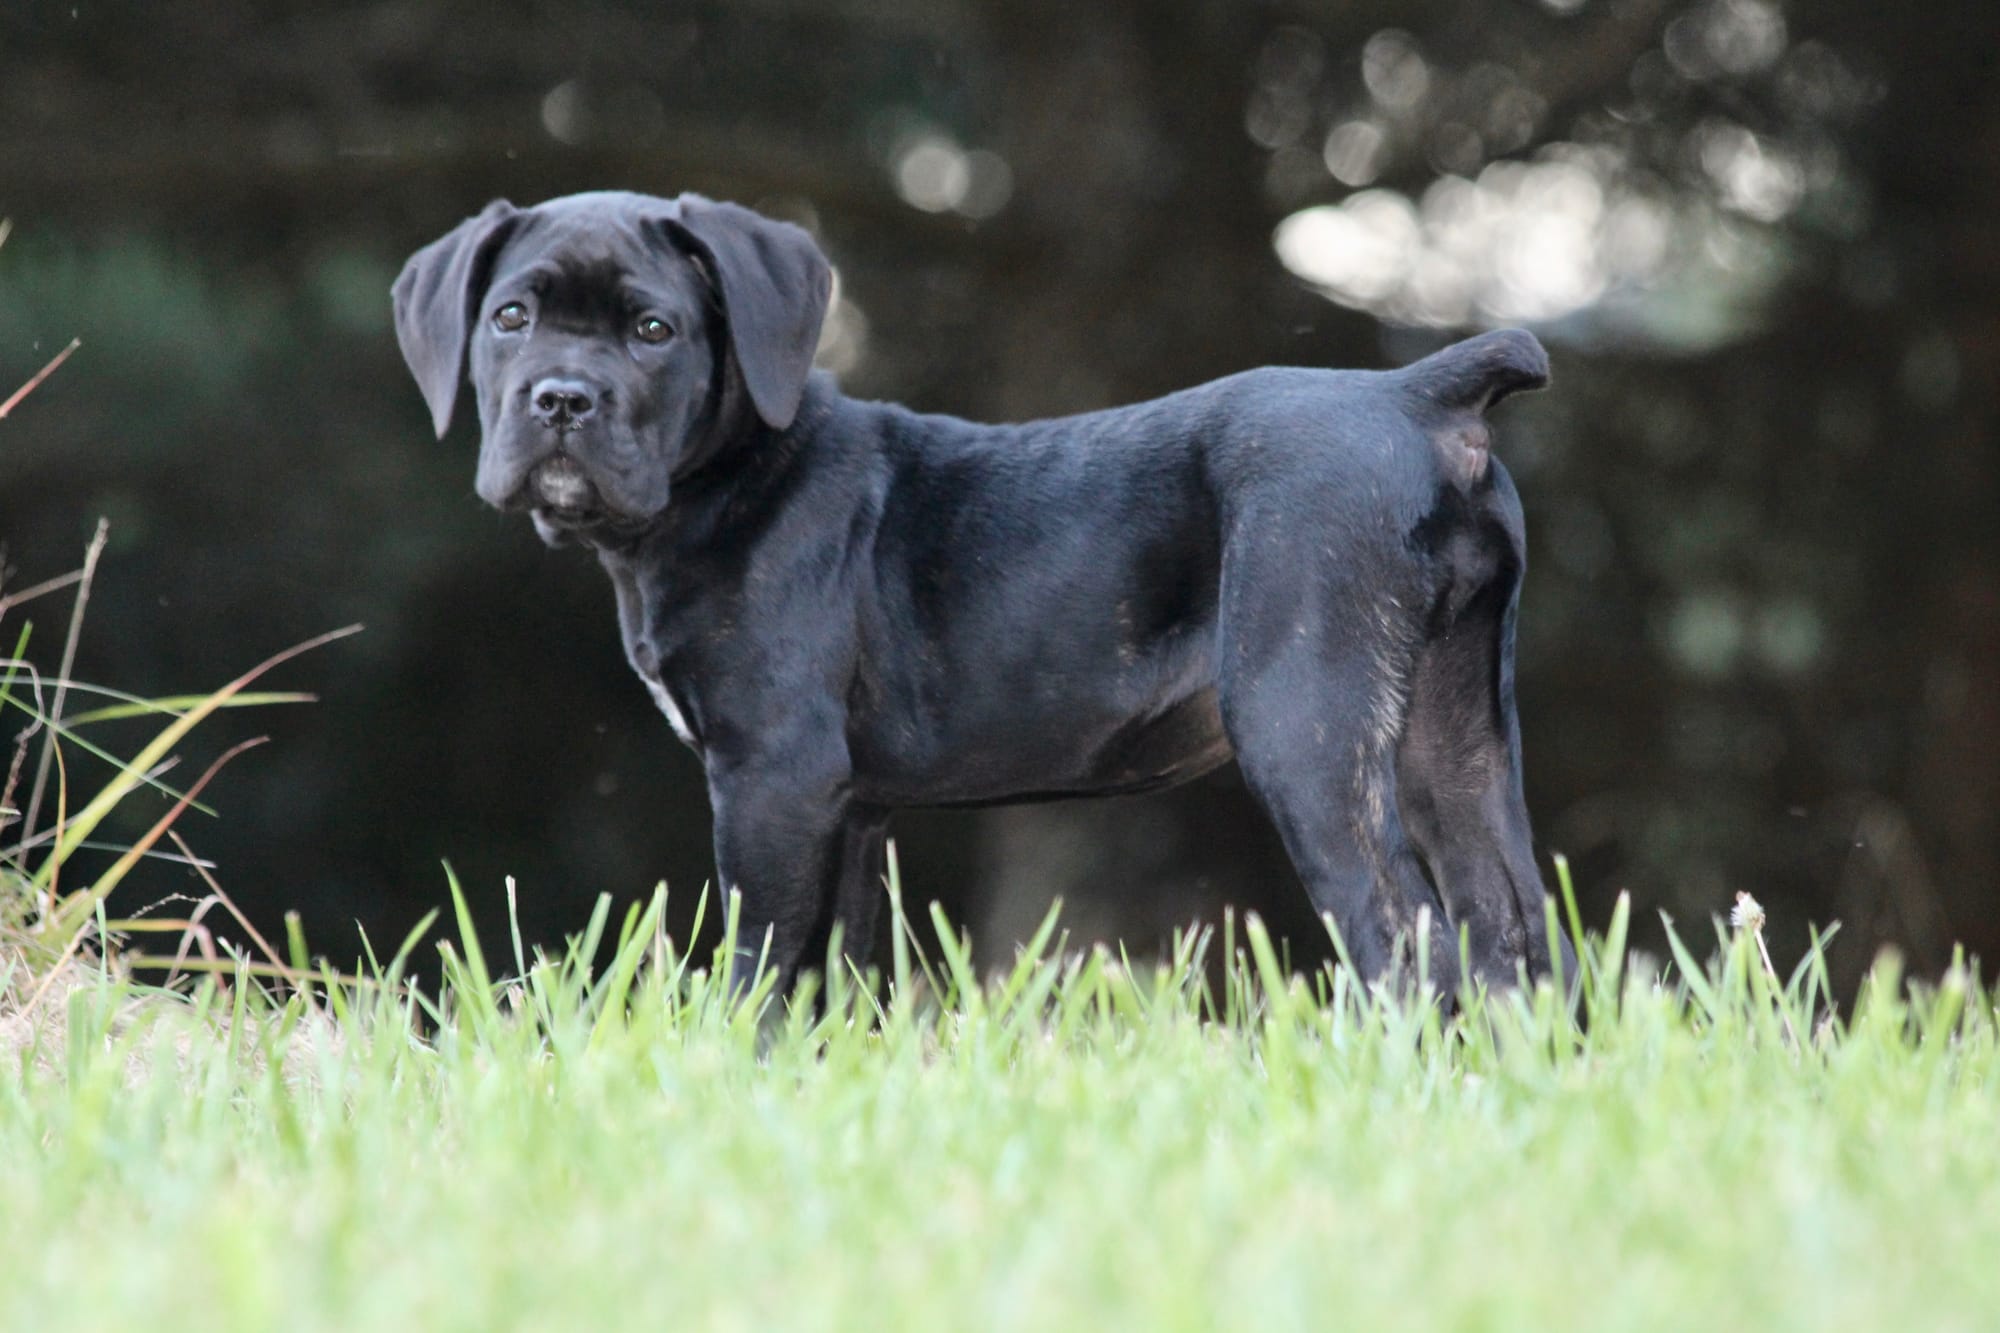 Black Cane Corso Puppy